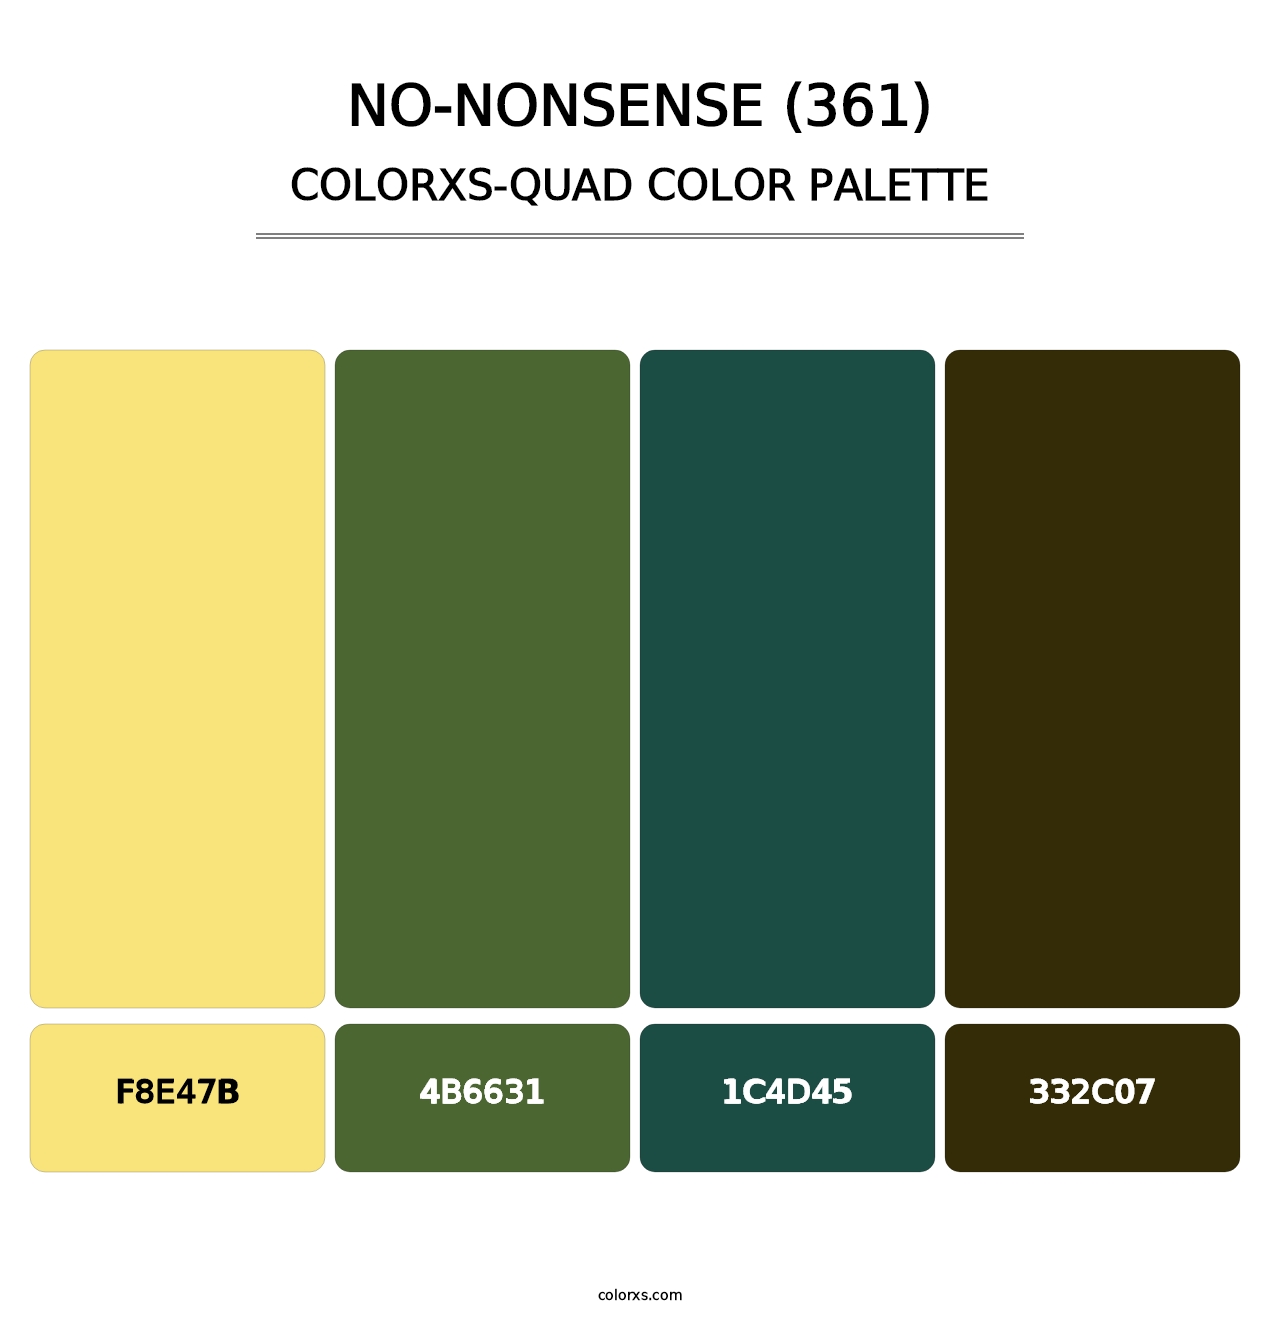 No-Nonsense (361) - Colorxs Quad Palette